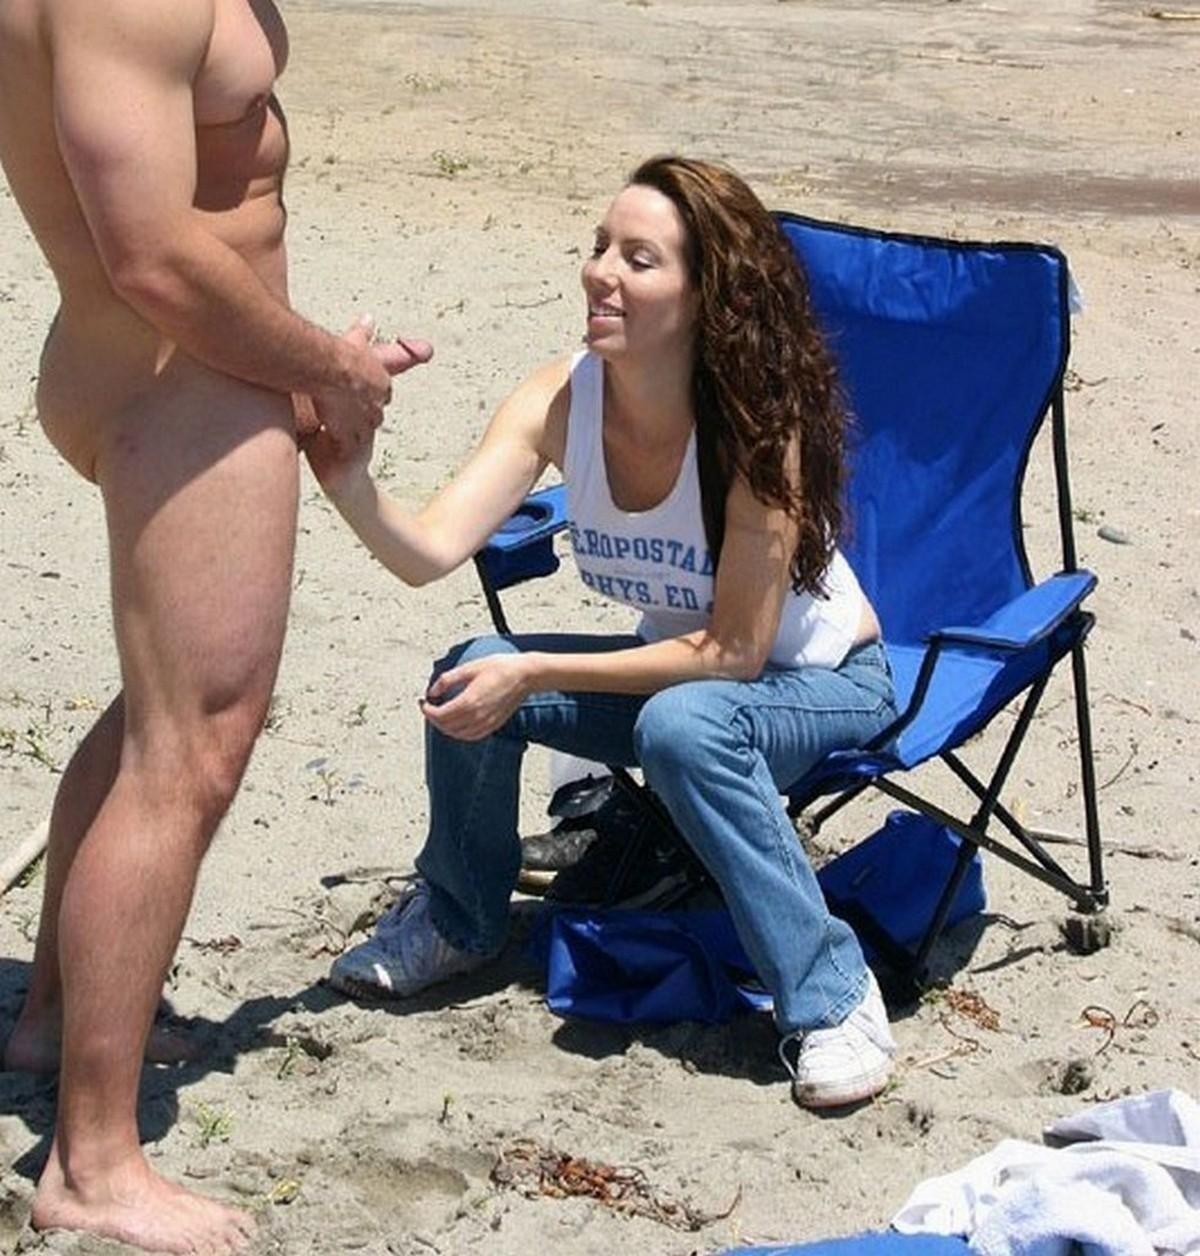 Big Dick Sex On Beach - Sexy babe sucks huge dick on a beach